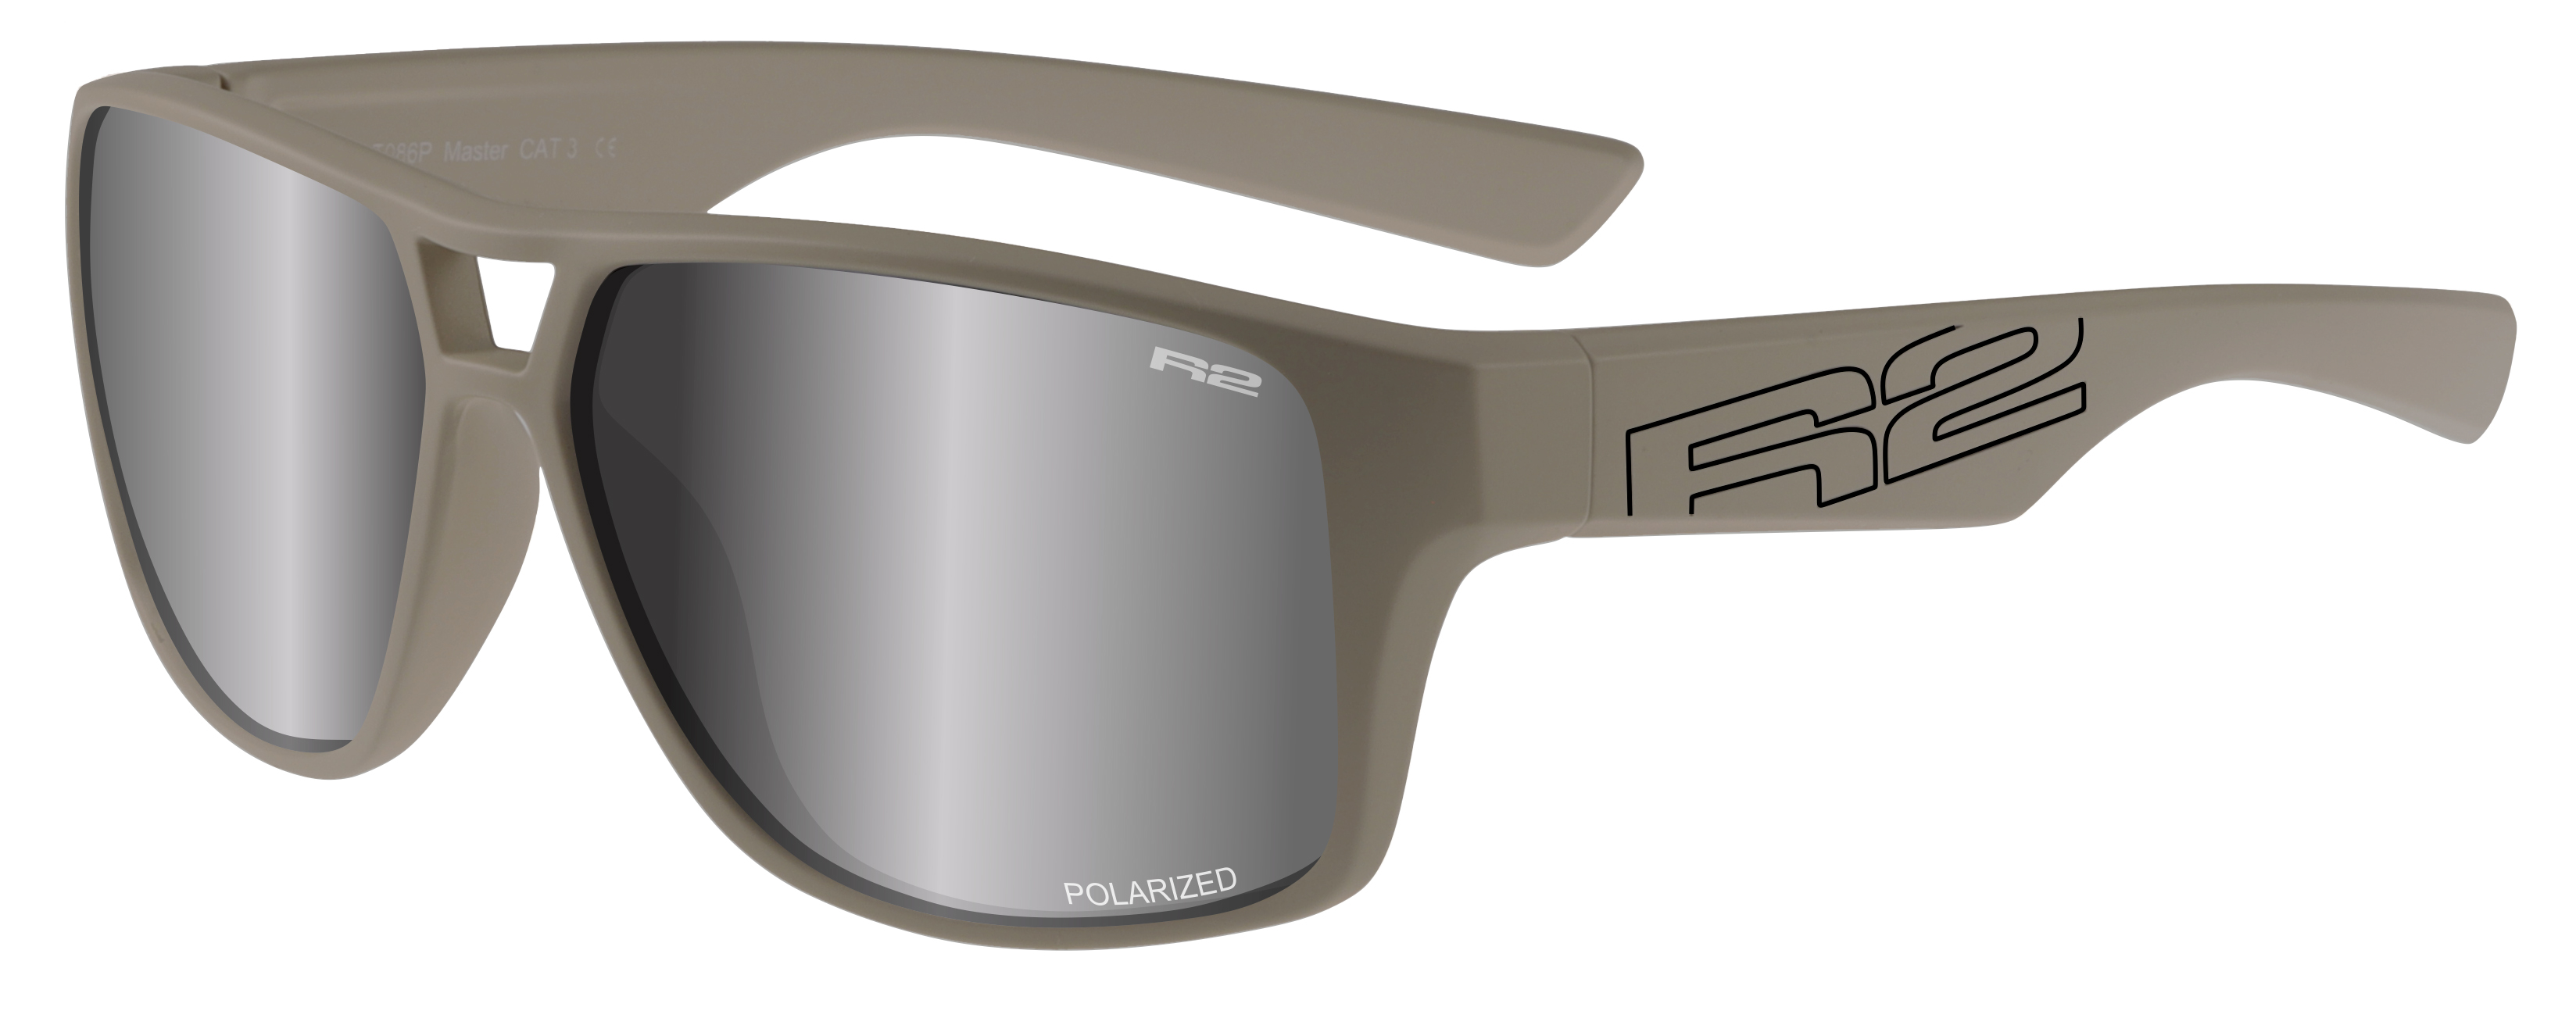 Sport sunglasses R2 MASTER AT086S standard